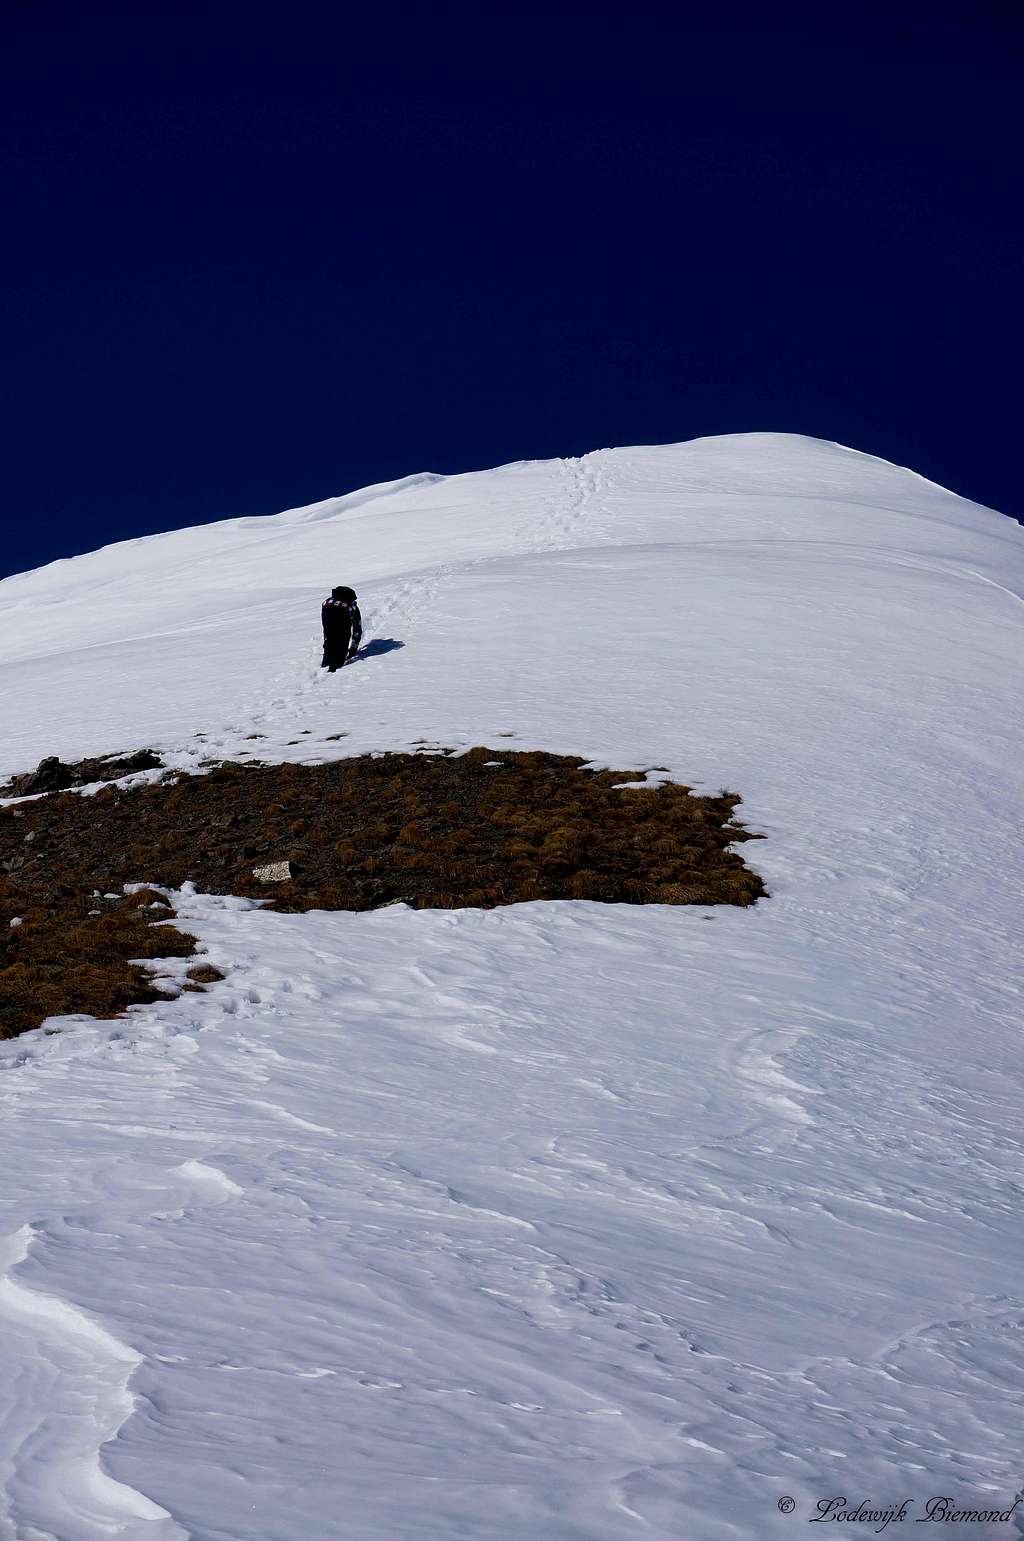 Ron climbing near the summit